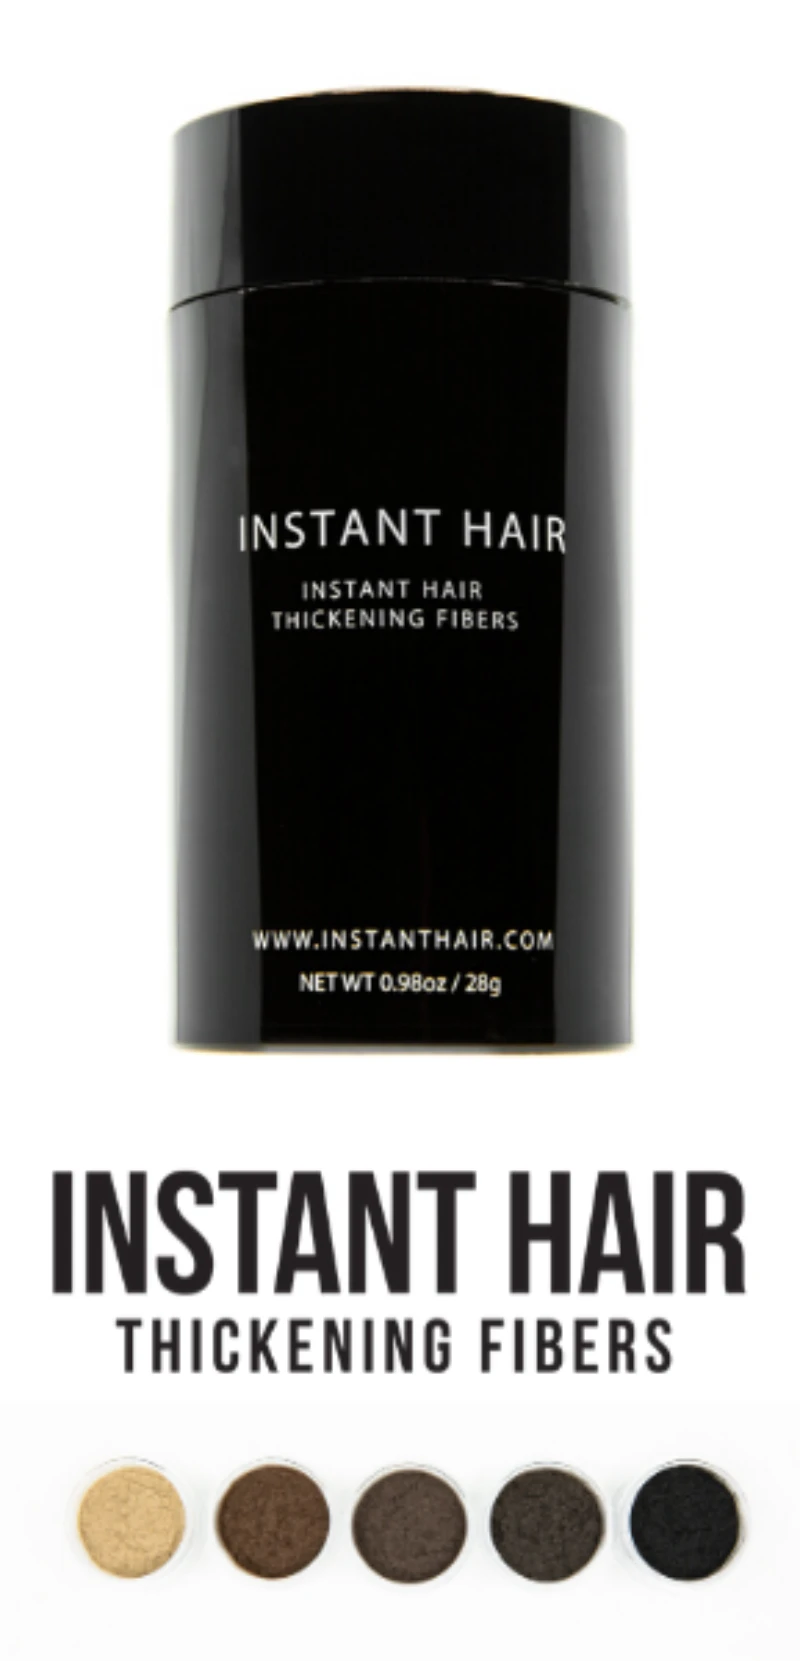 Instant Hair Cross Promo Banner | THTS